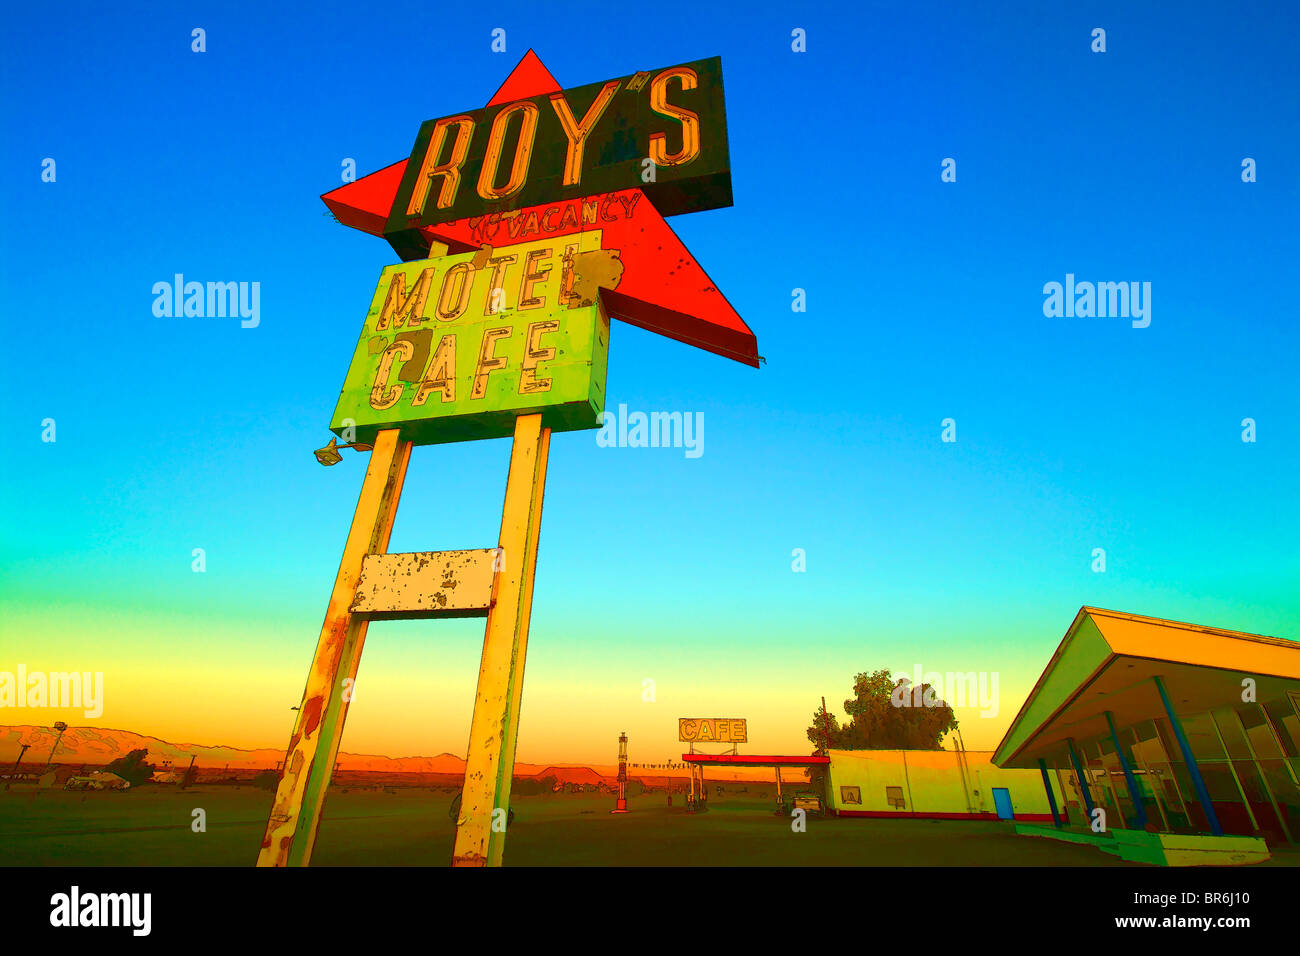 Roys Motel-Café Zeichen, alte Route 66, Amboy, CA, USA Stockfoto